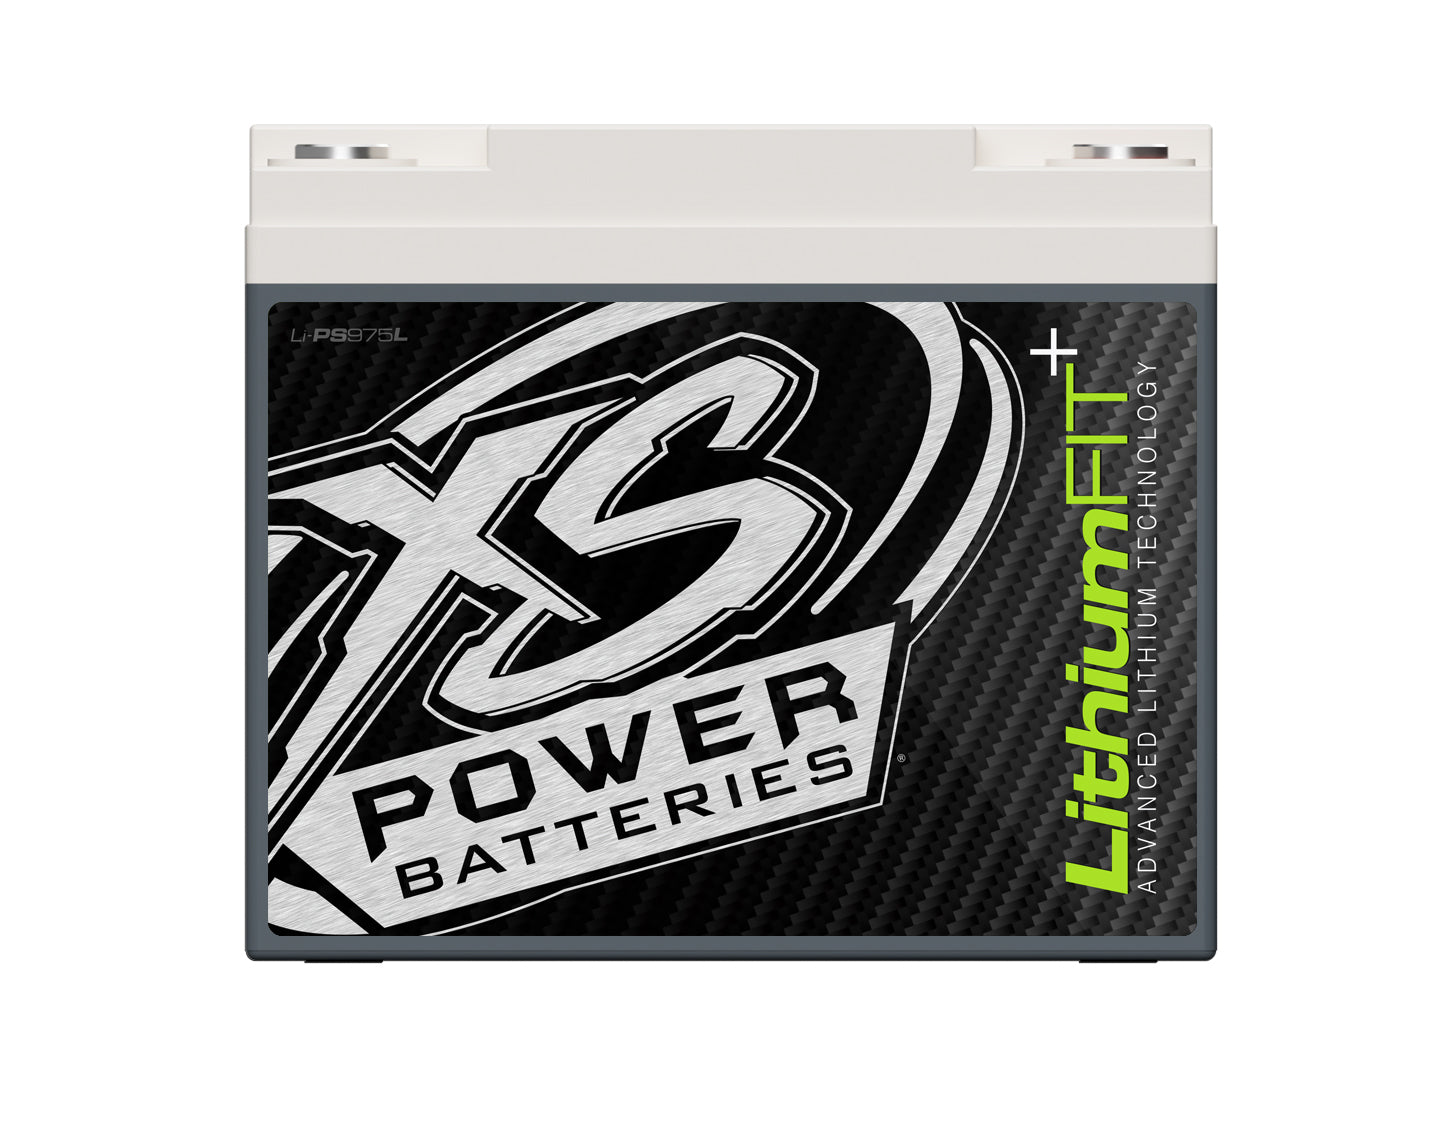 Li-PS975L XS Power 12VDC Lithium Powersports Battery 720A 39.6Ah Group U1R